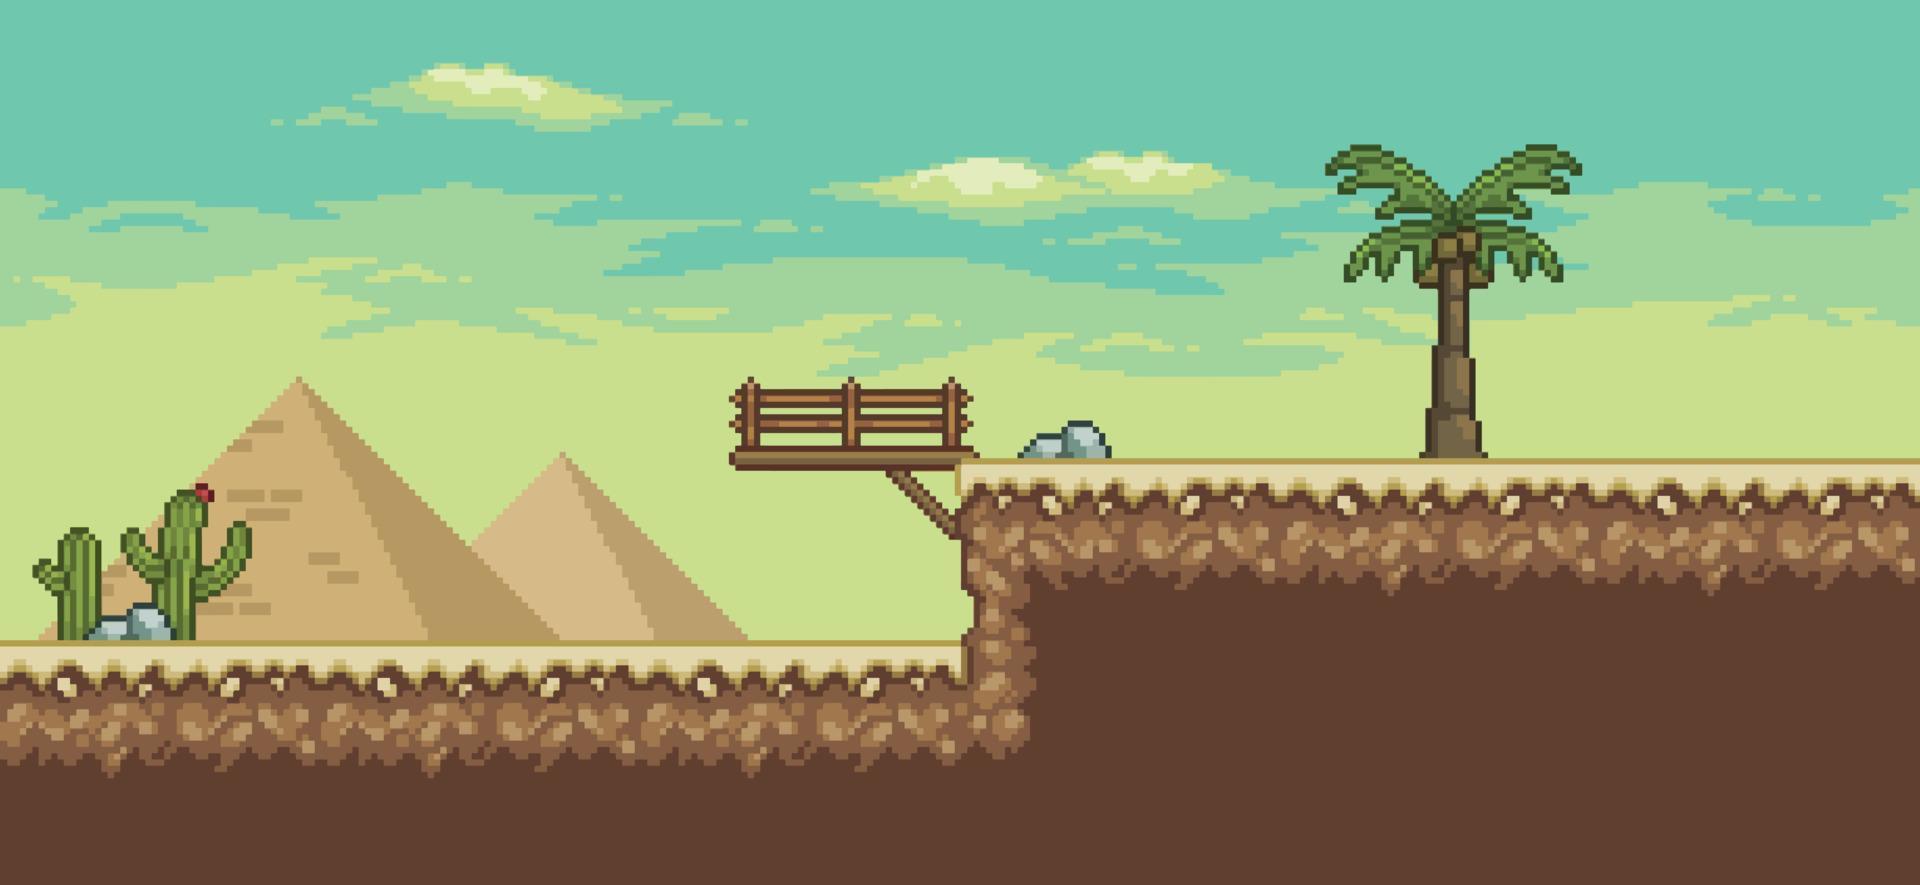 Pixel art desert game scene with  palm tree, pyramid, bridge, cactuses, 8bit background vector